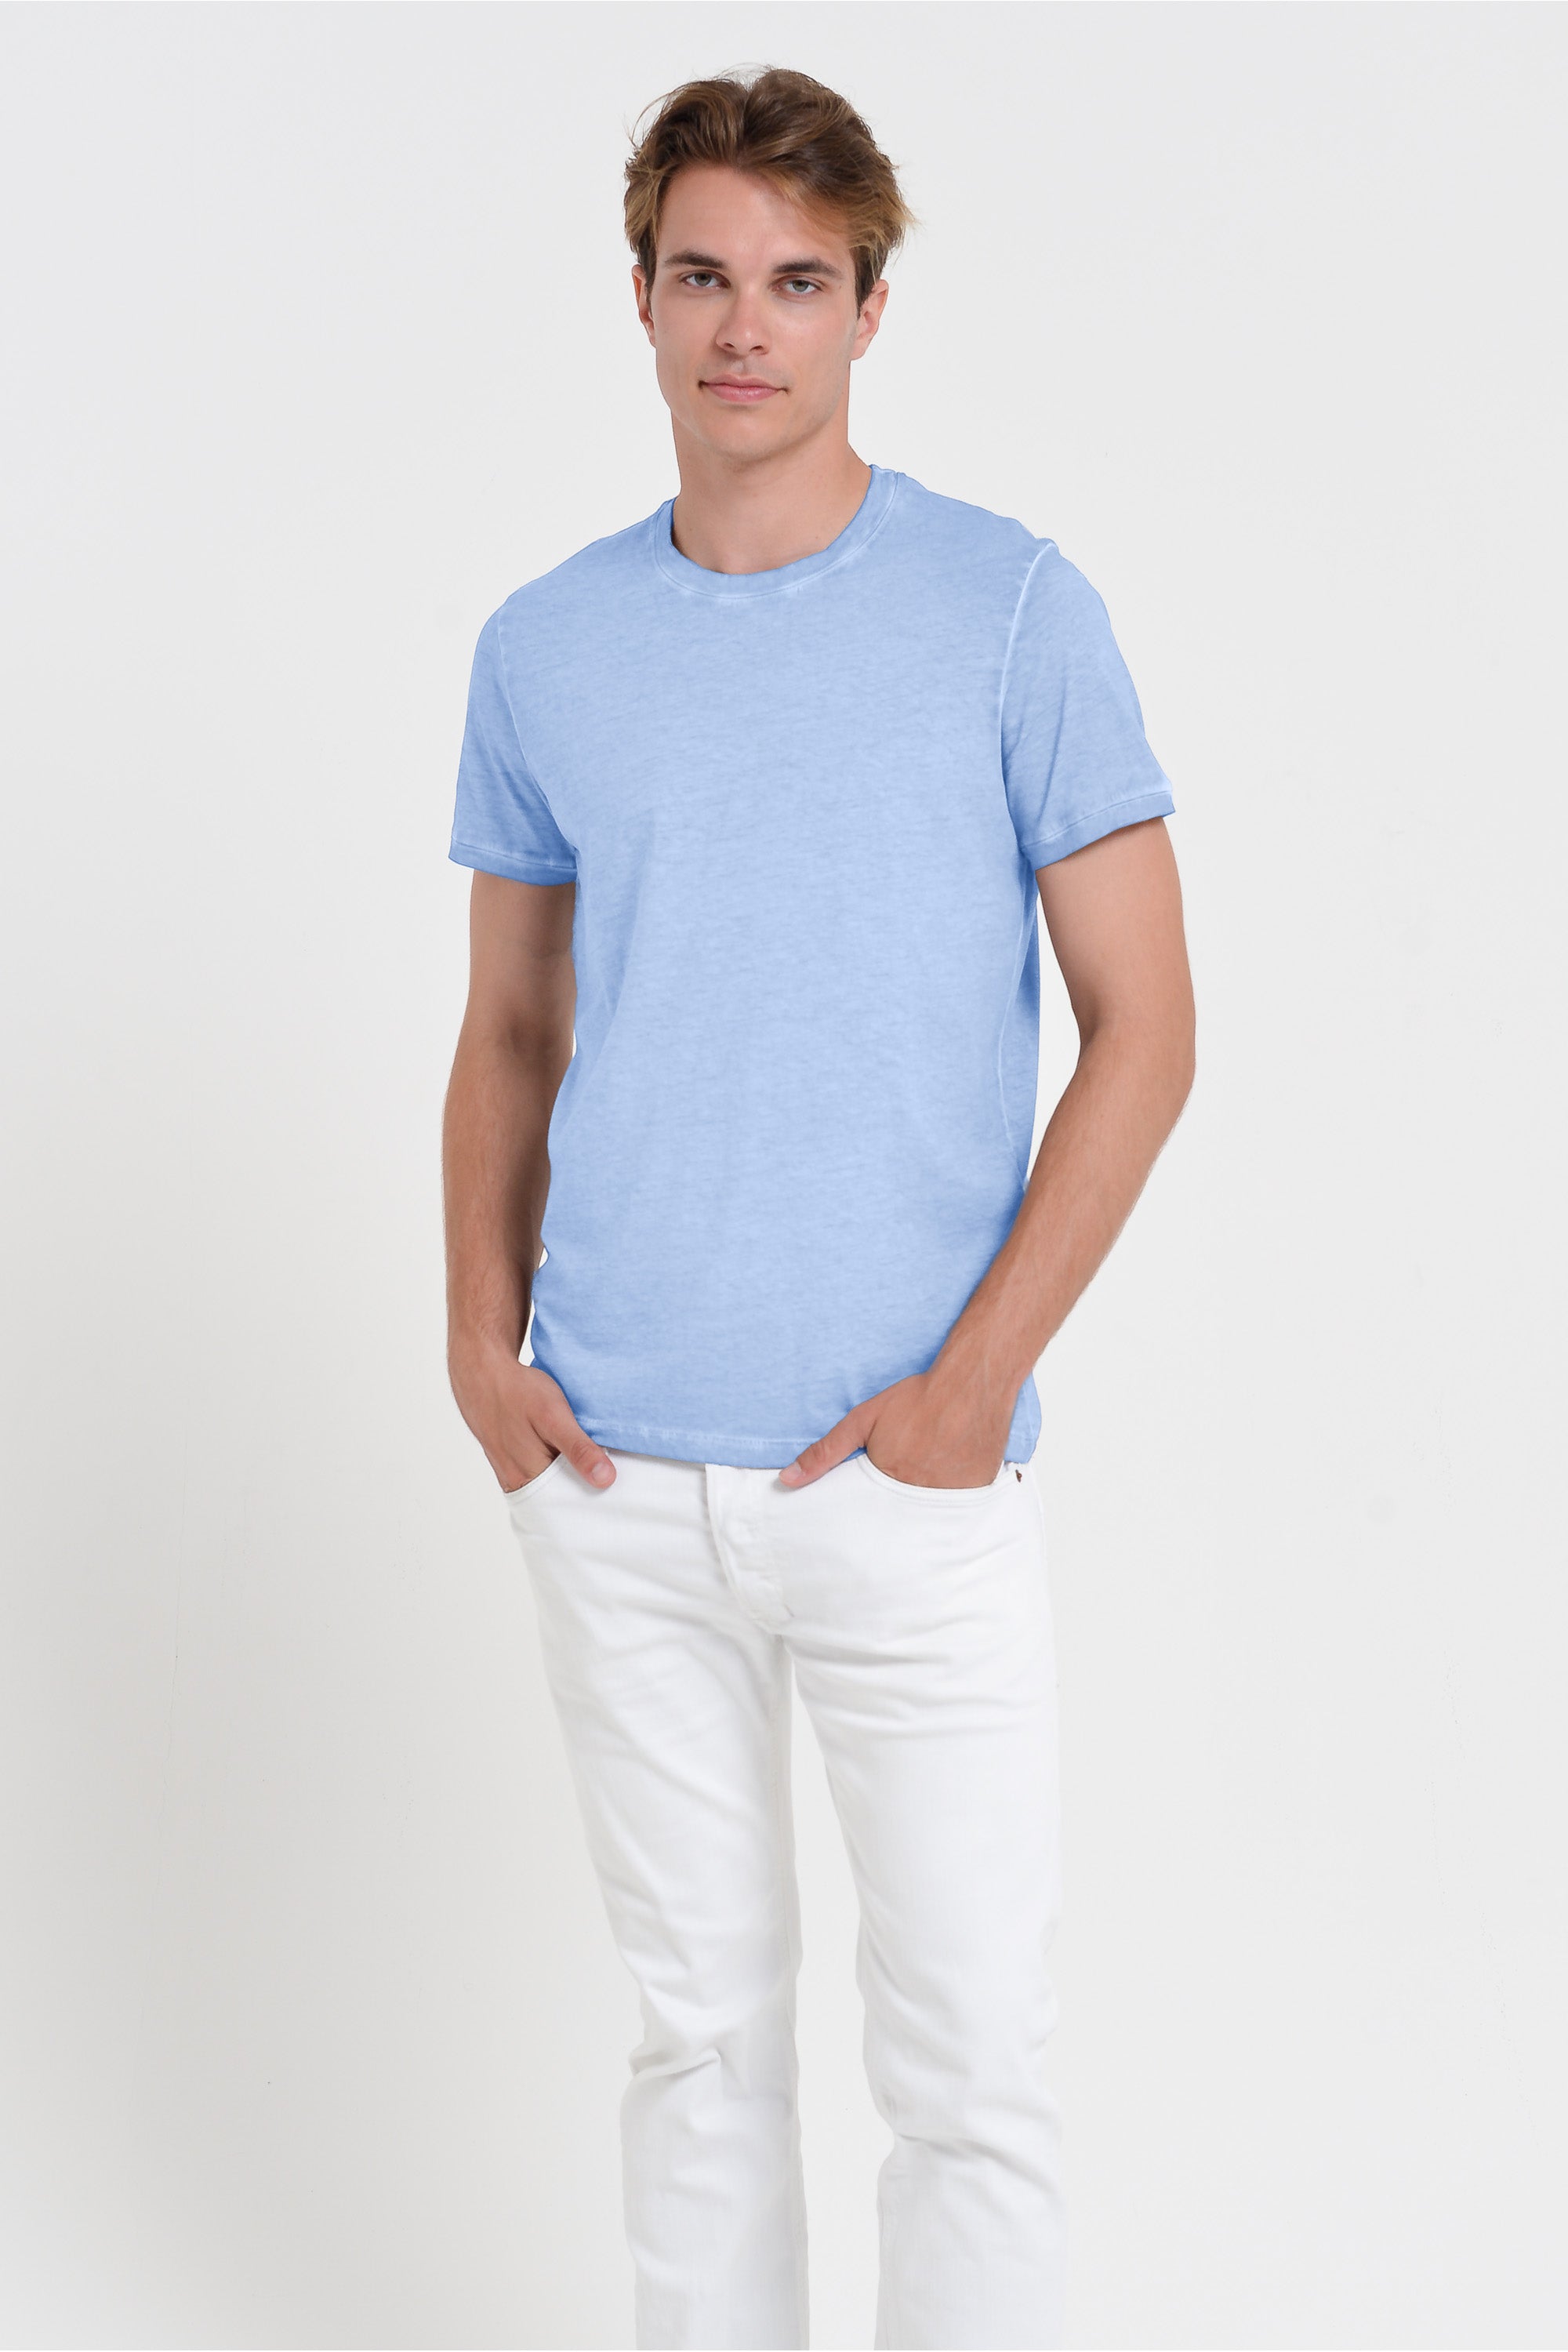 Smart Casual Cotton T-Shirt - Cielo